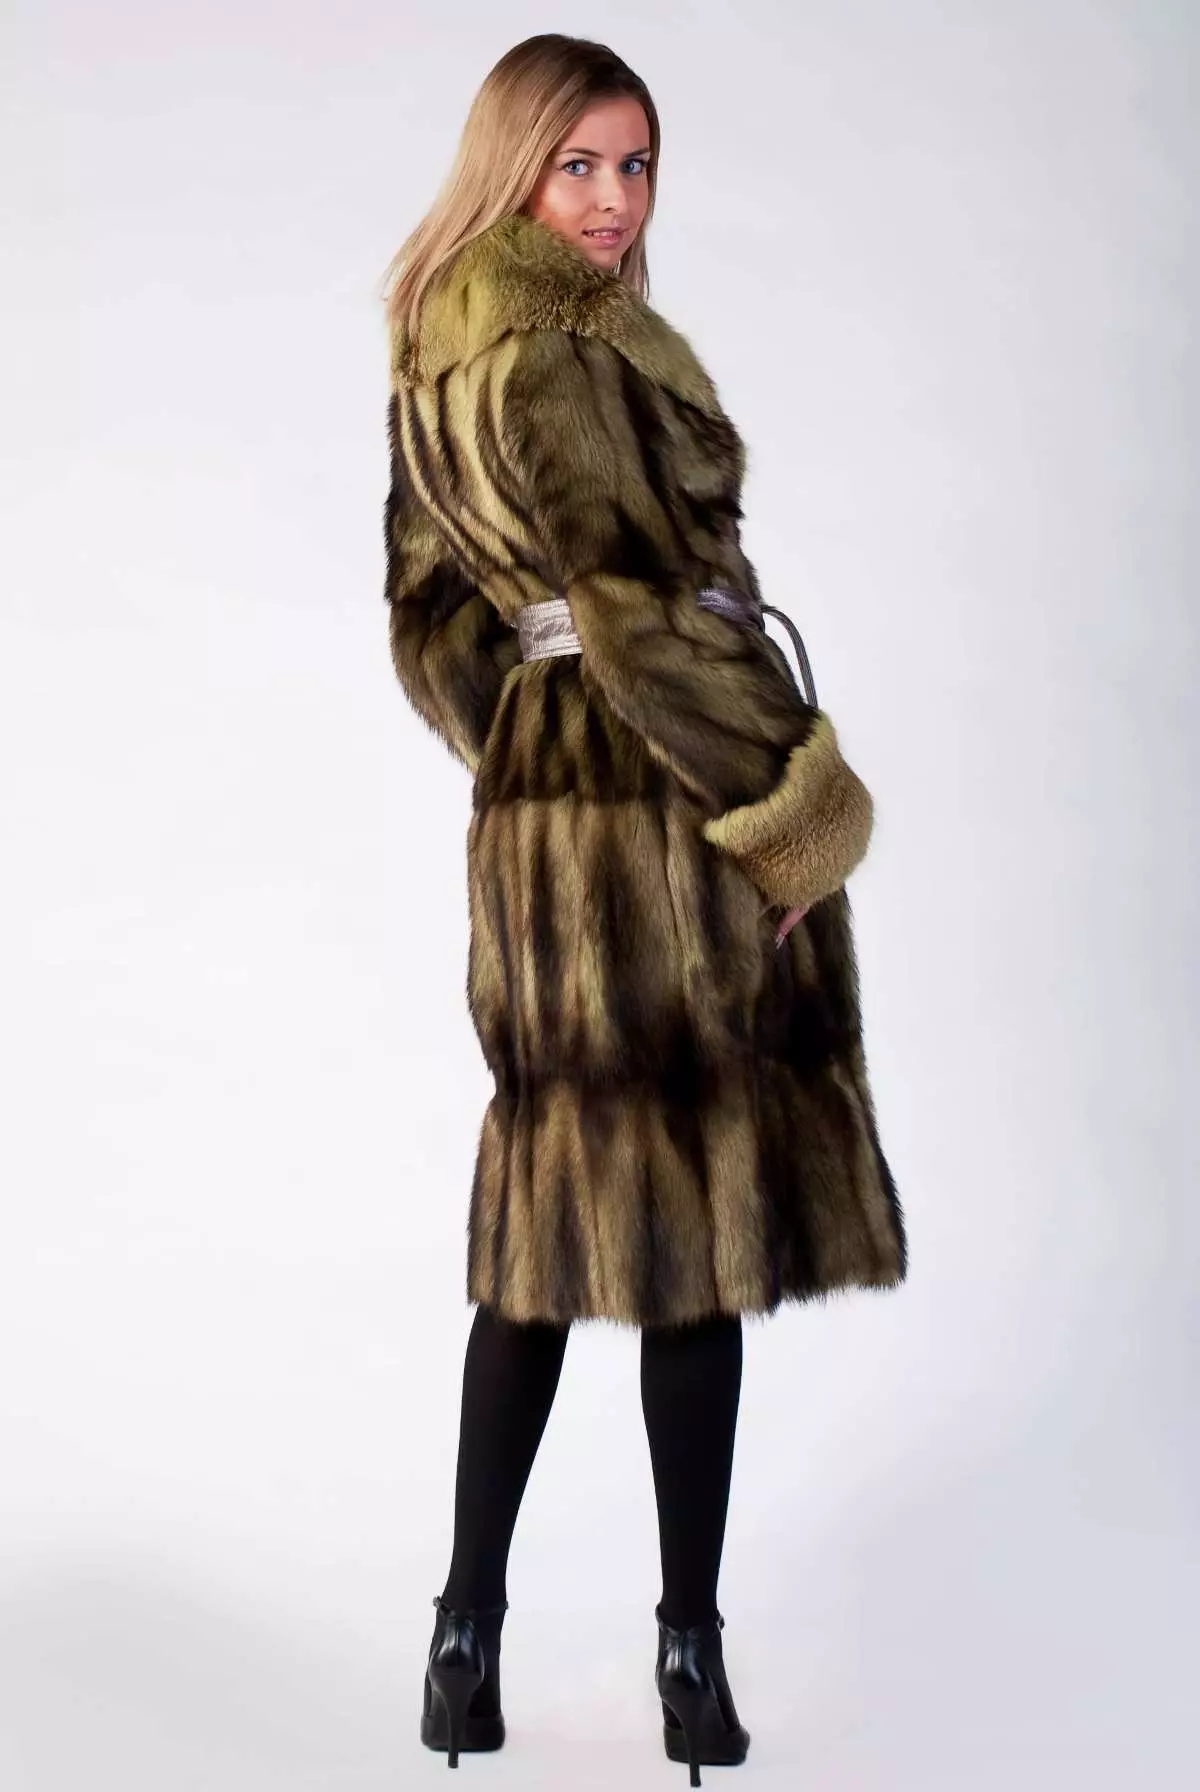 Ferreck Fur Coat (54 fotos): Strike Fur-Sleved Models, con Ferret, Cherish Coat Reviews 716_8